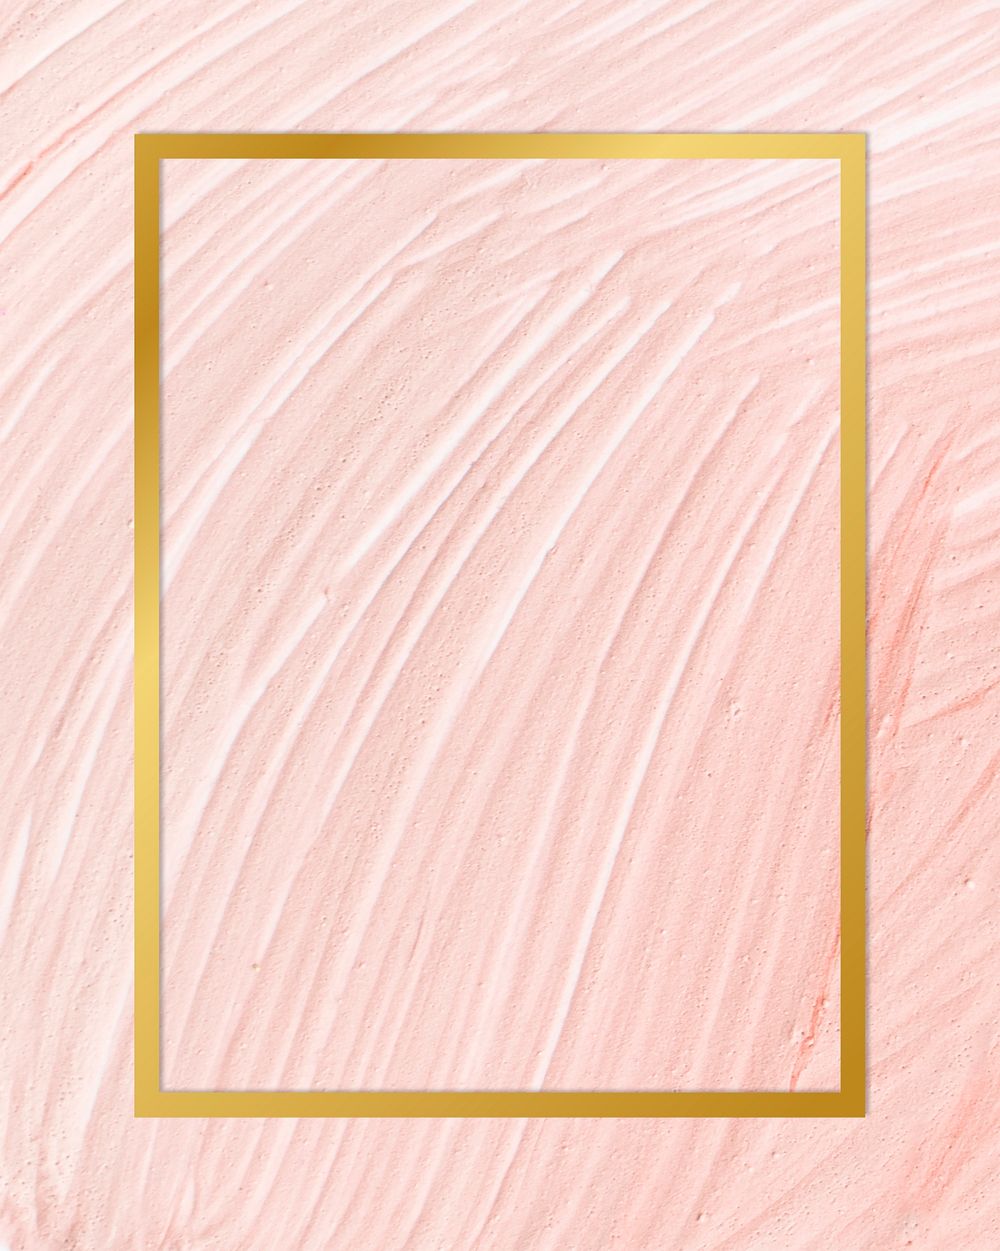 Gold rectangle frame on a pastel pink paintbrush stroke patterned background